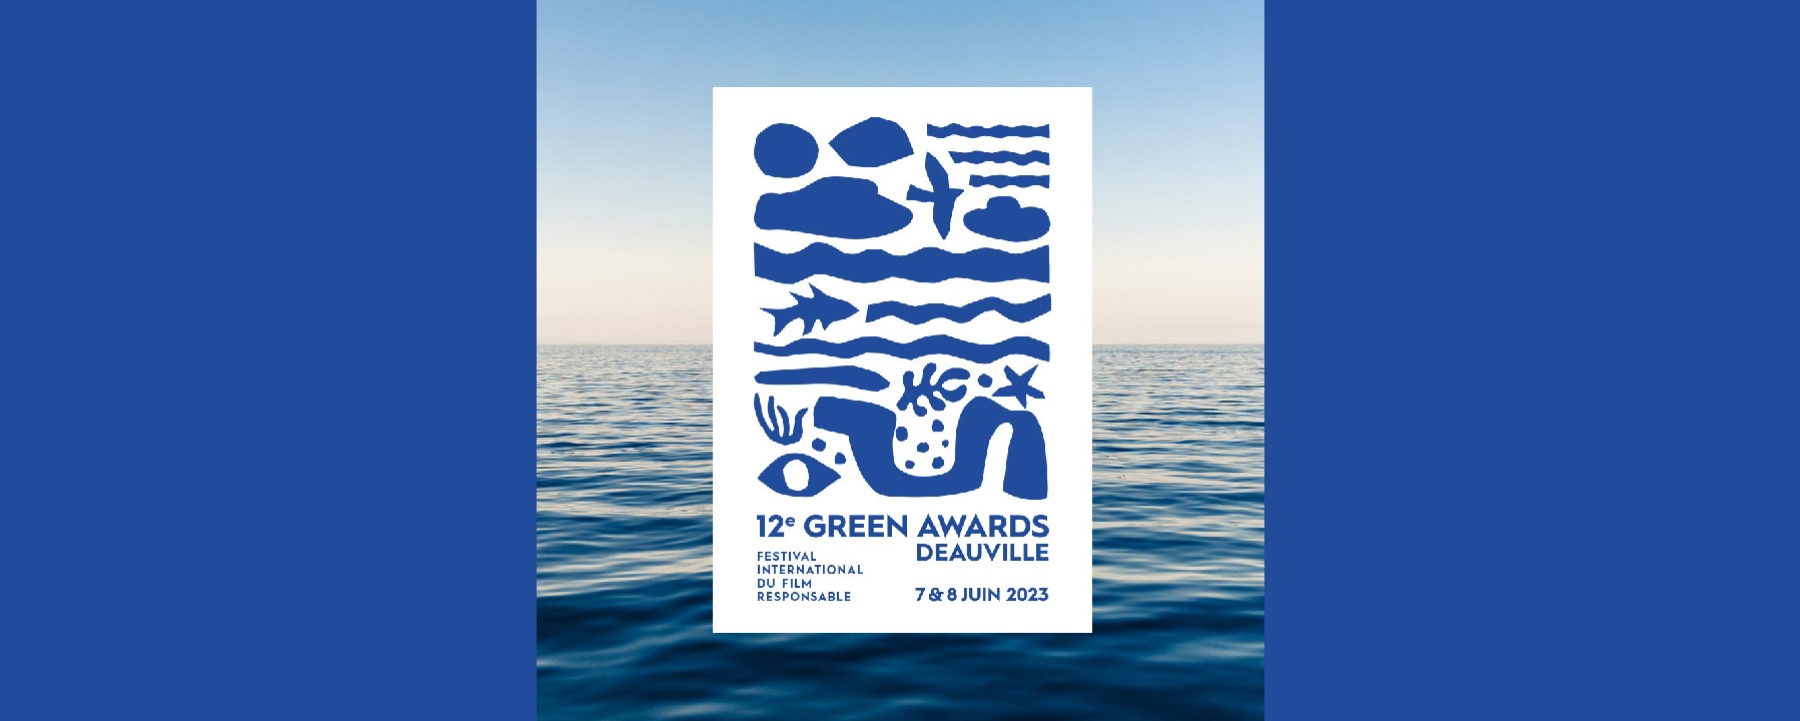 Deauville Green Awards 2023